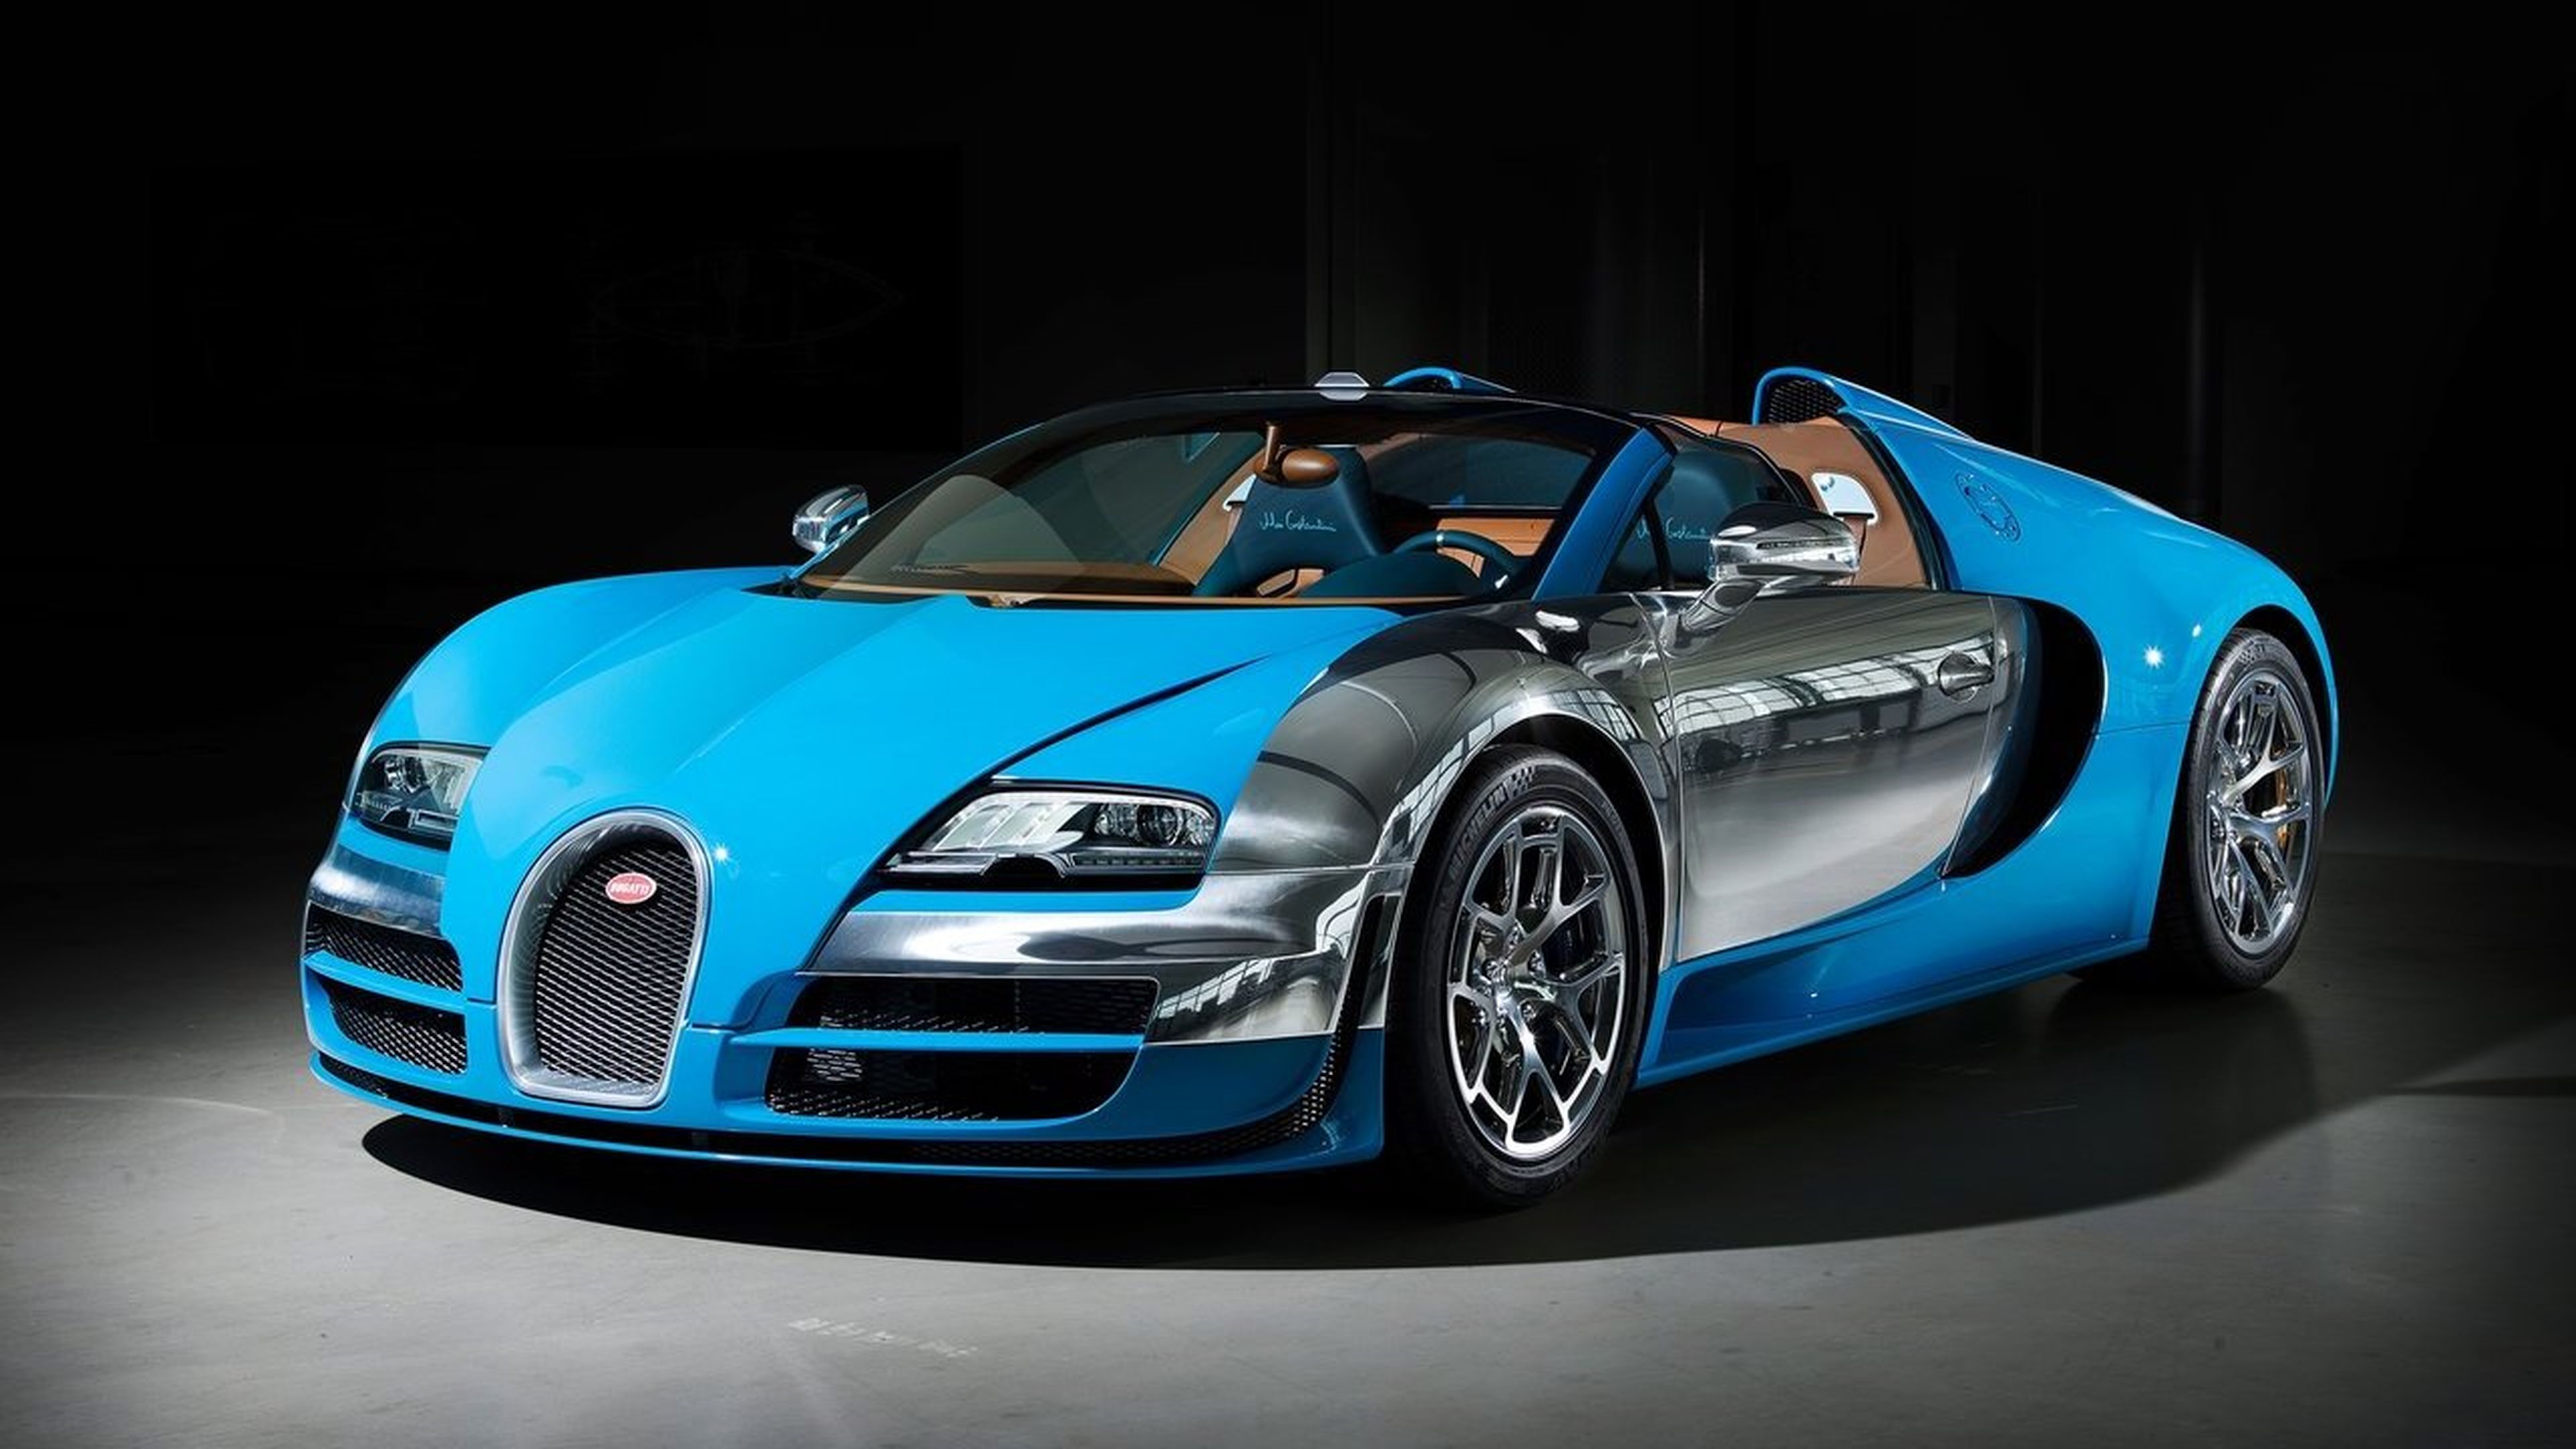 Bugatti Veyron Meo Costantini